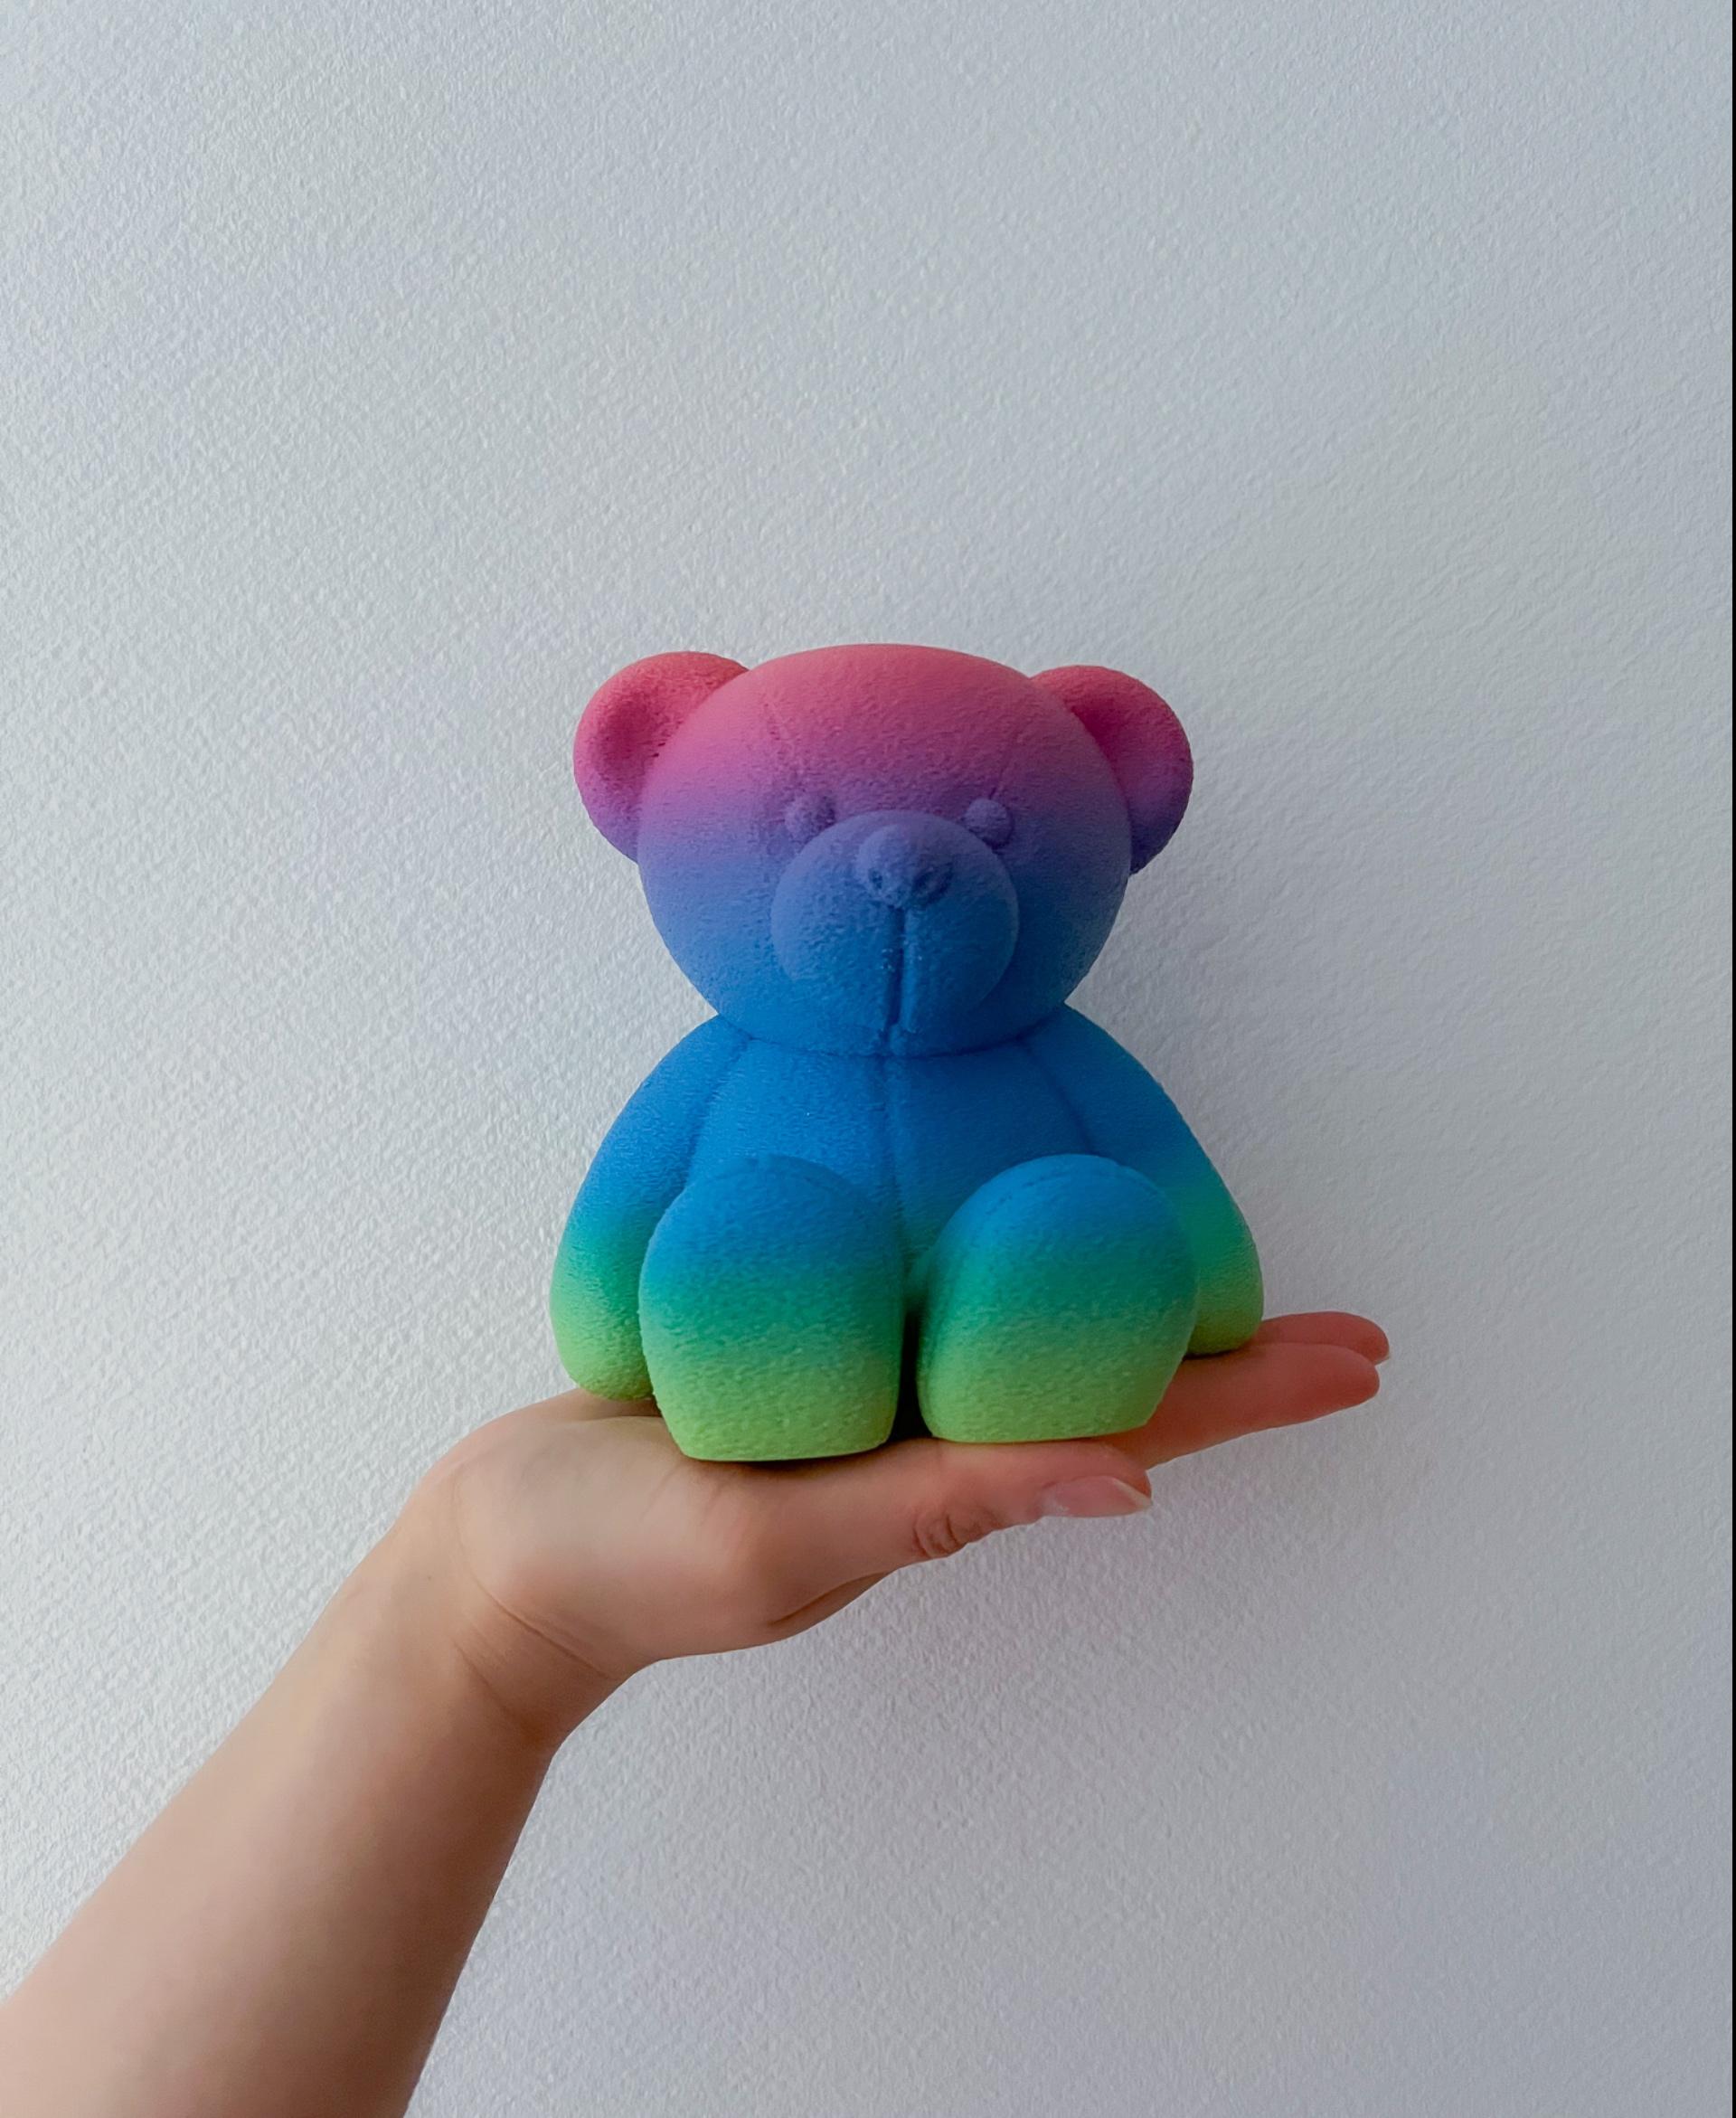 Barry Bear - 150% size in fuzzy skin.
Isanmate rainbow filament. - 3d model